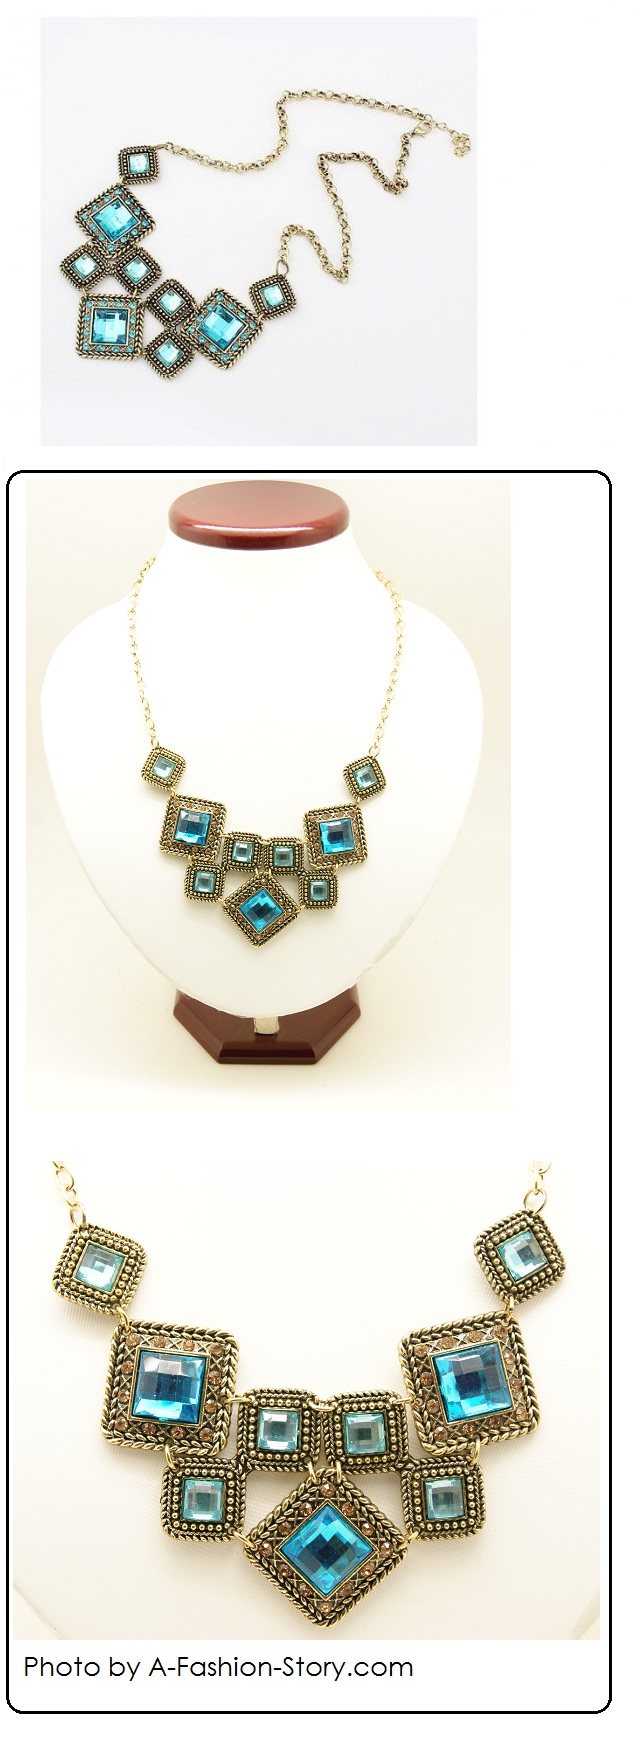 P90234 Blue beads elegance accessories short necklace brunei